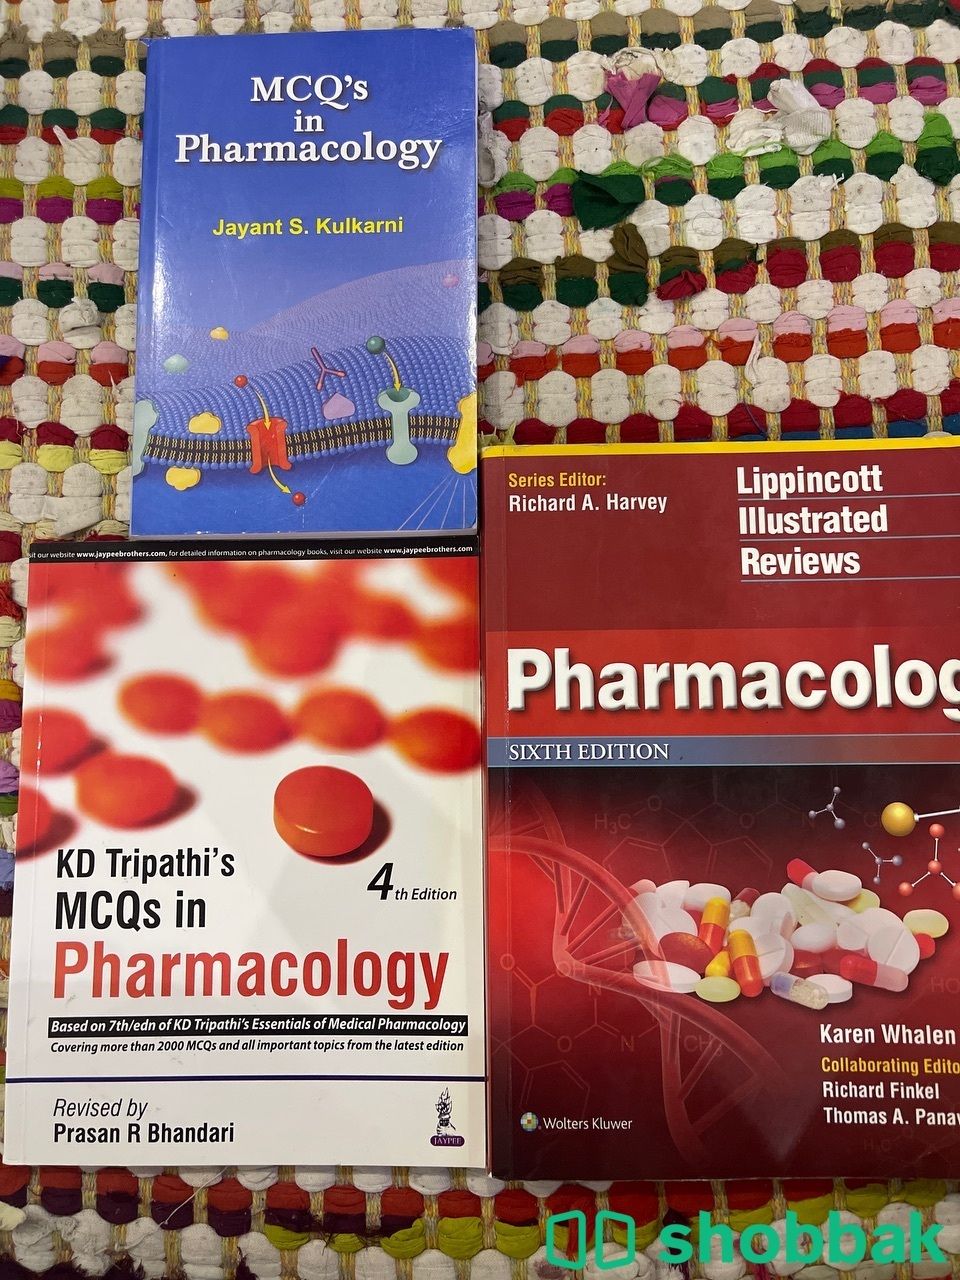 Pharmacology/علم الادوية Shobbak Saudi Arabia